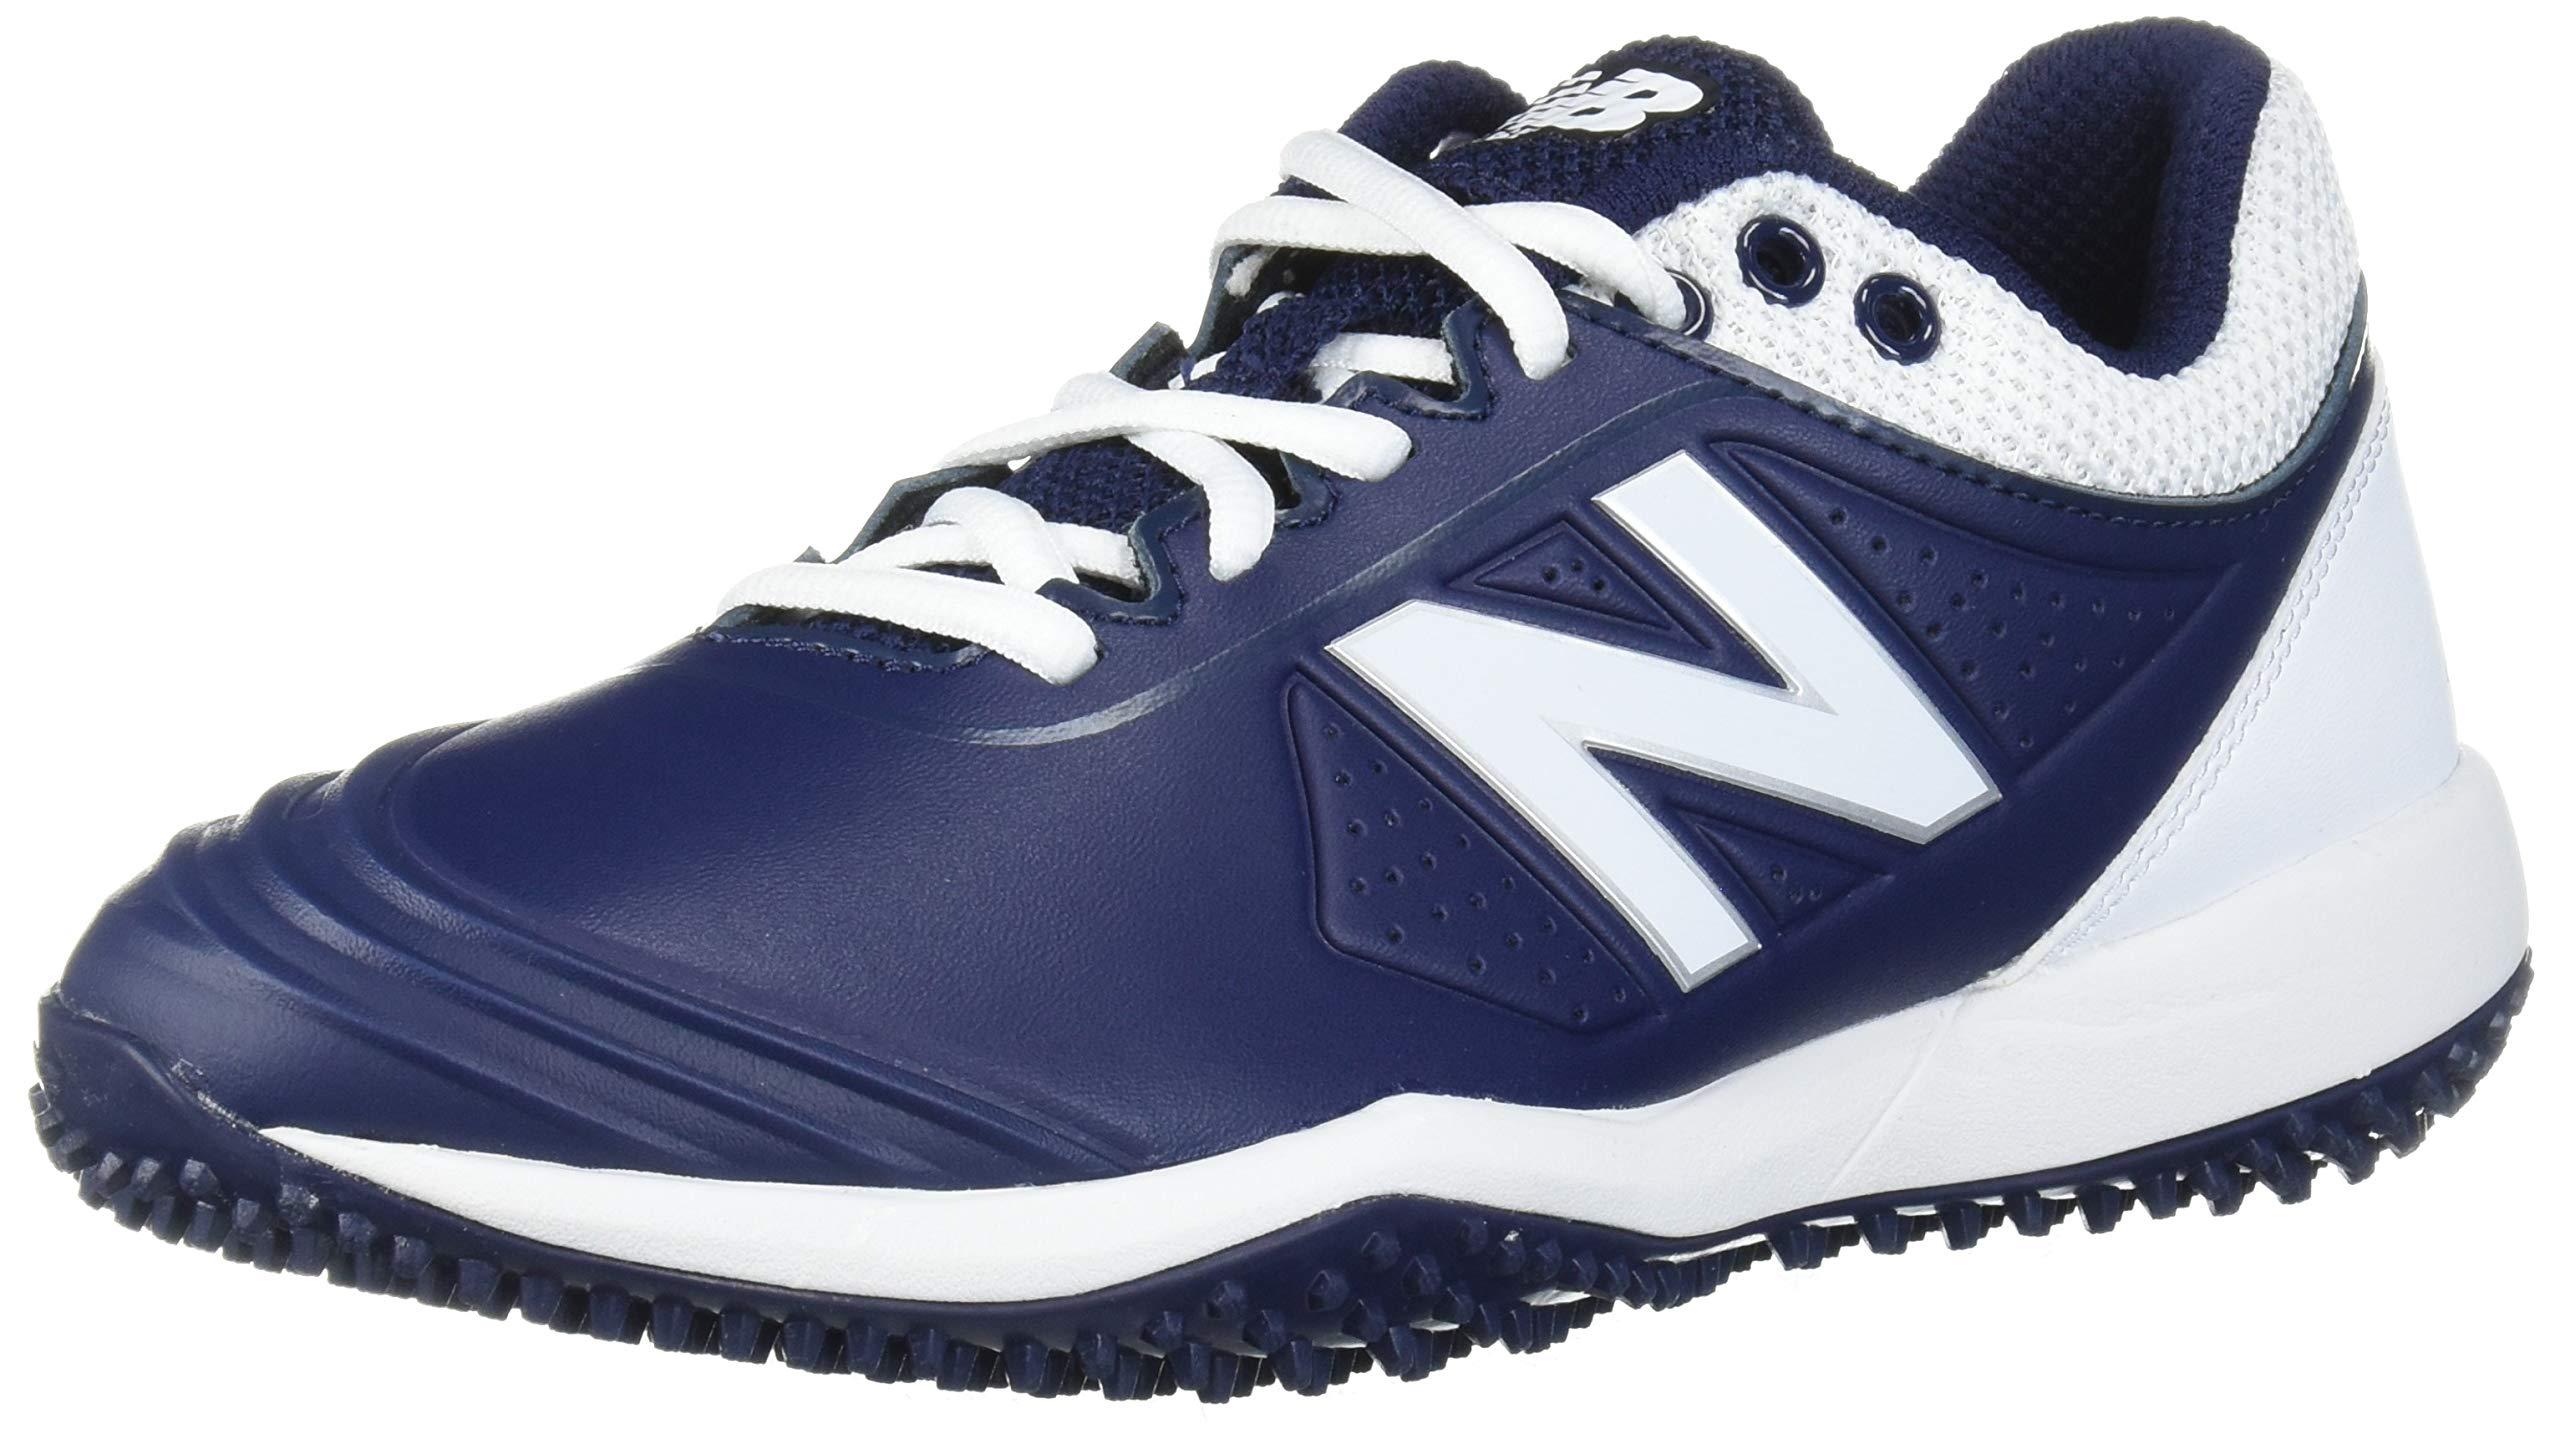 New Balance Fuse V2 Turf Baseball Shoe in Navy/White (Blue) - Lyst